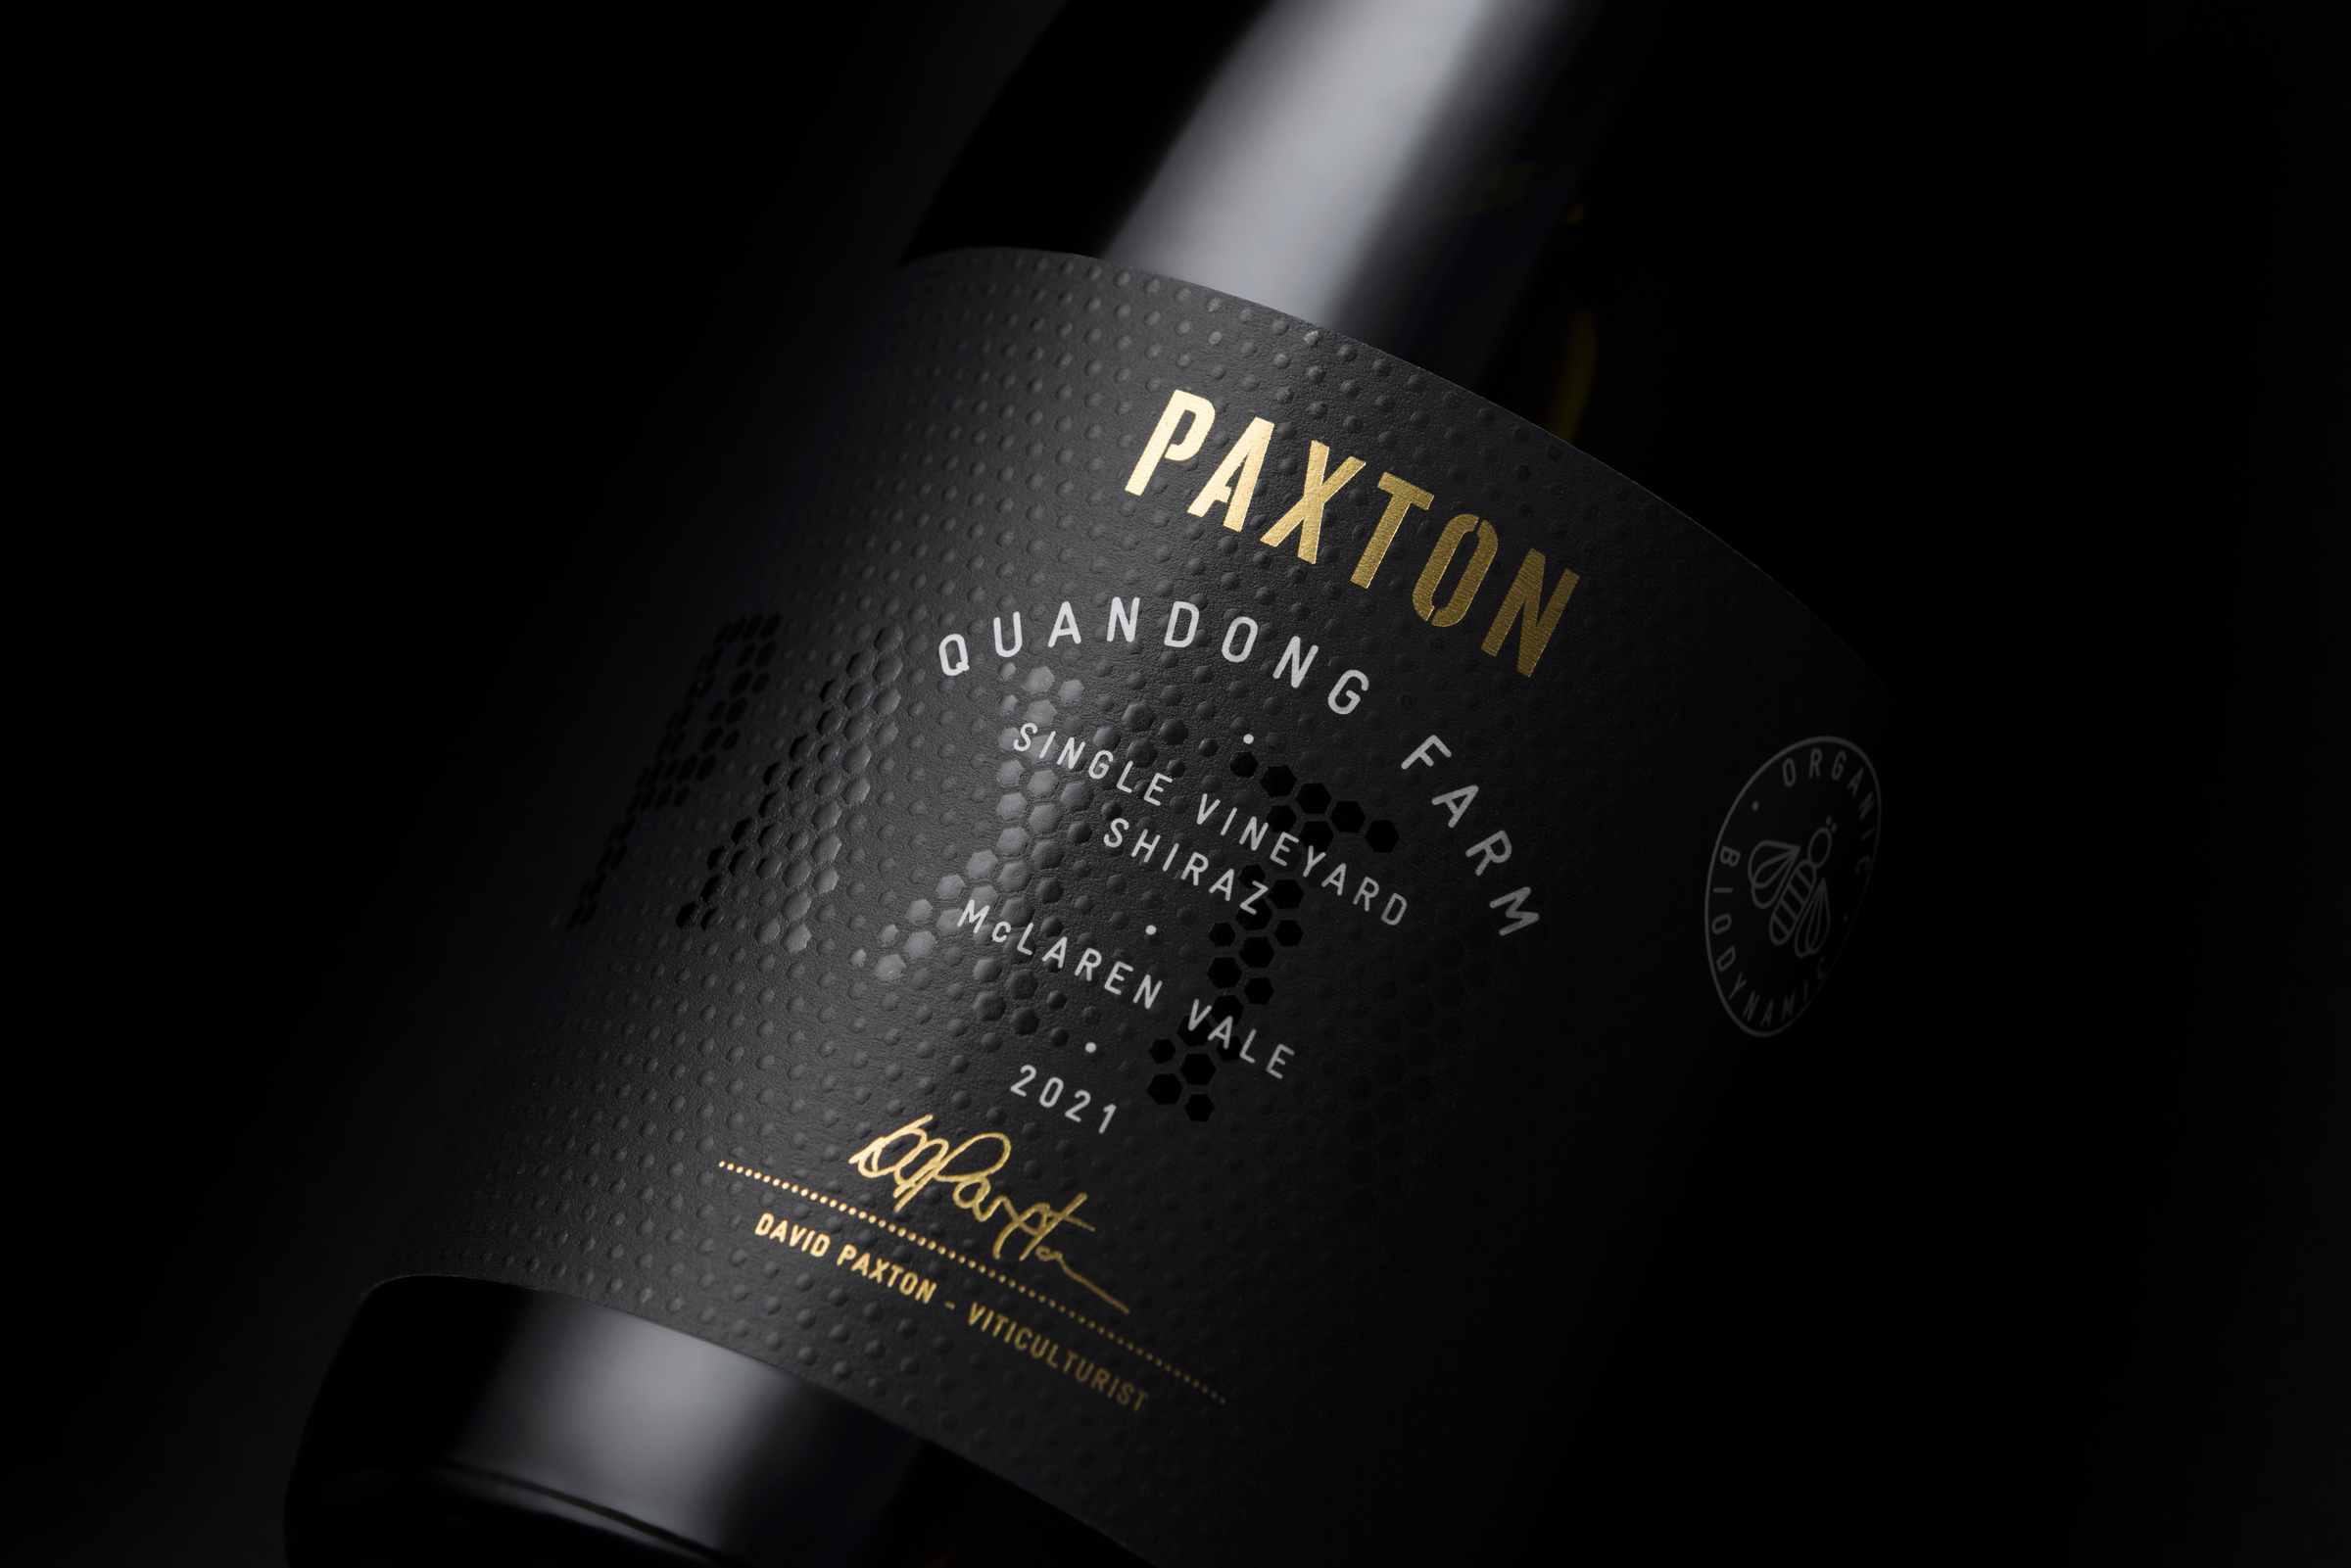 Paxton – Single Vineyard Collection